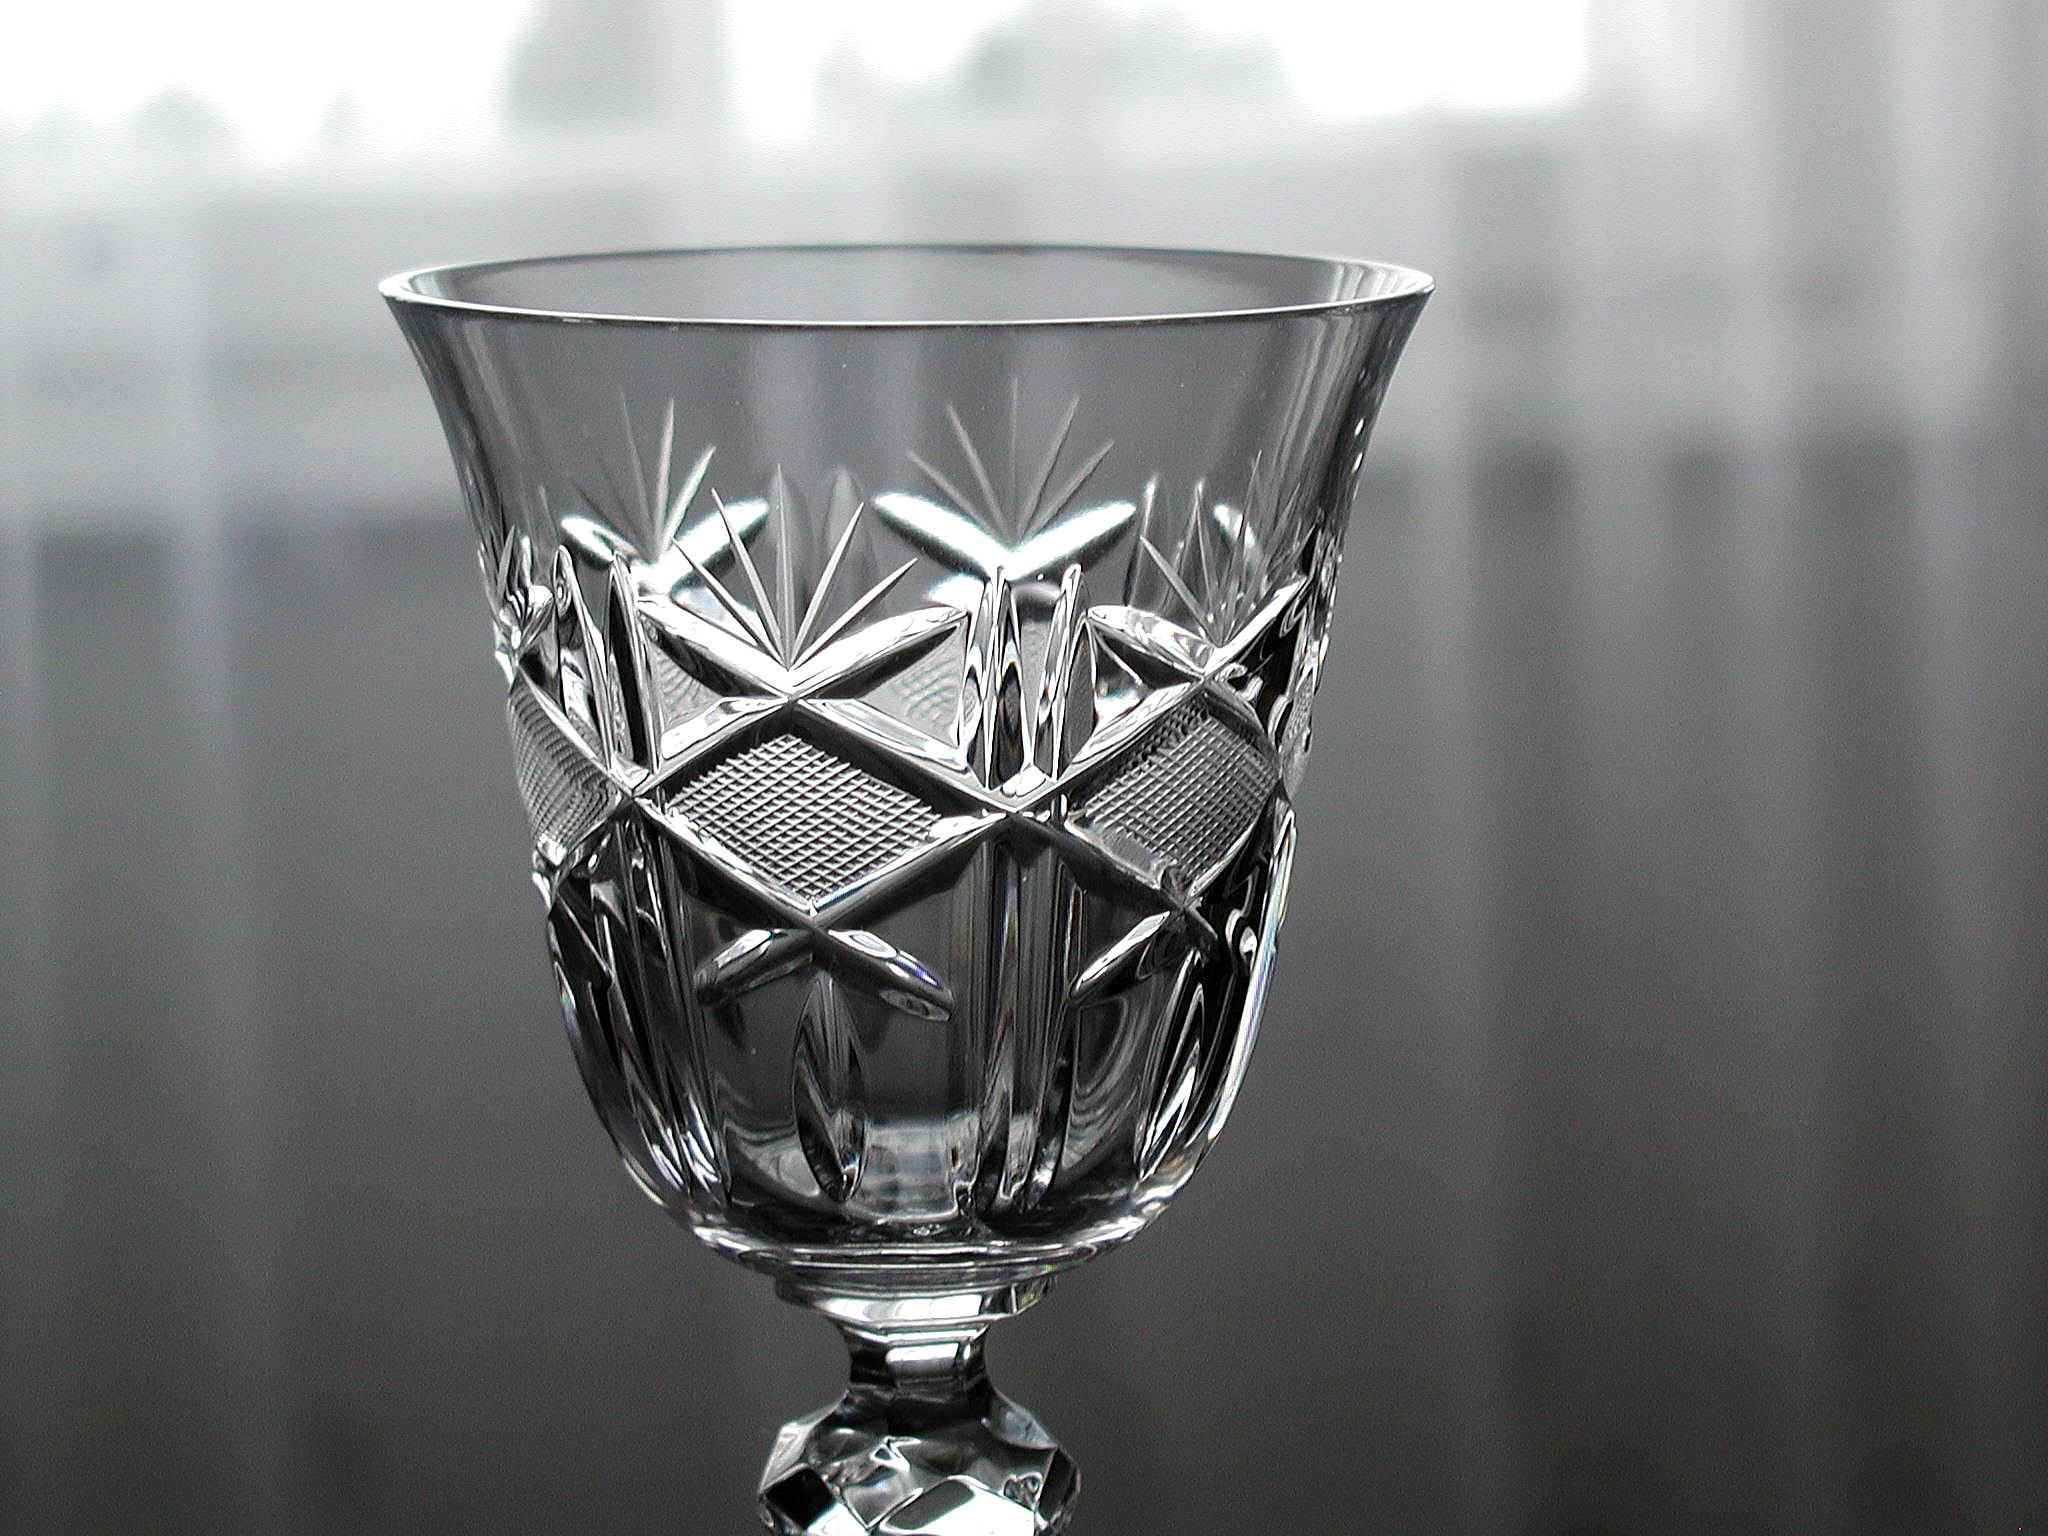 File:Crystal glass.jpg - Wikimedia Commons